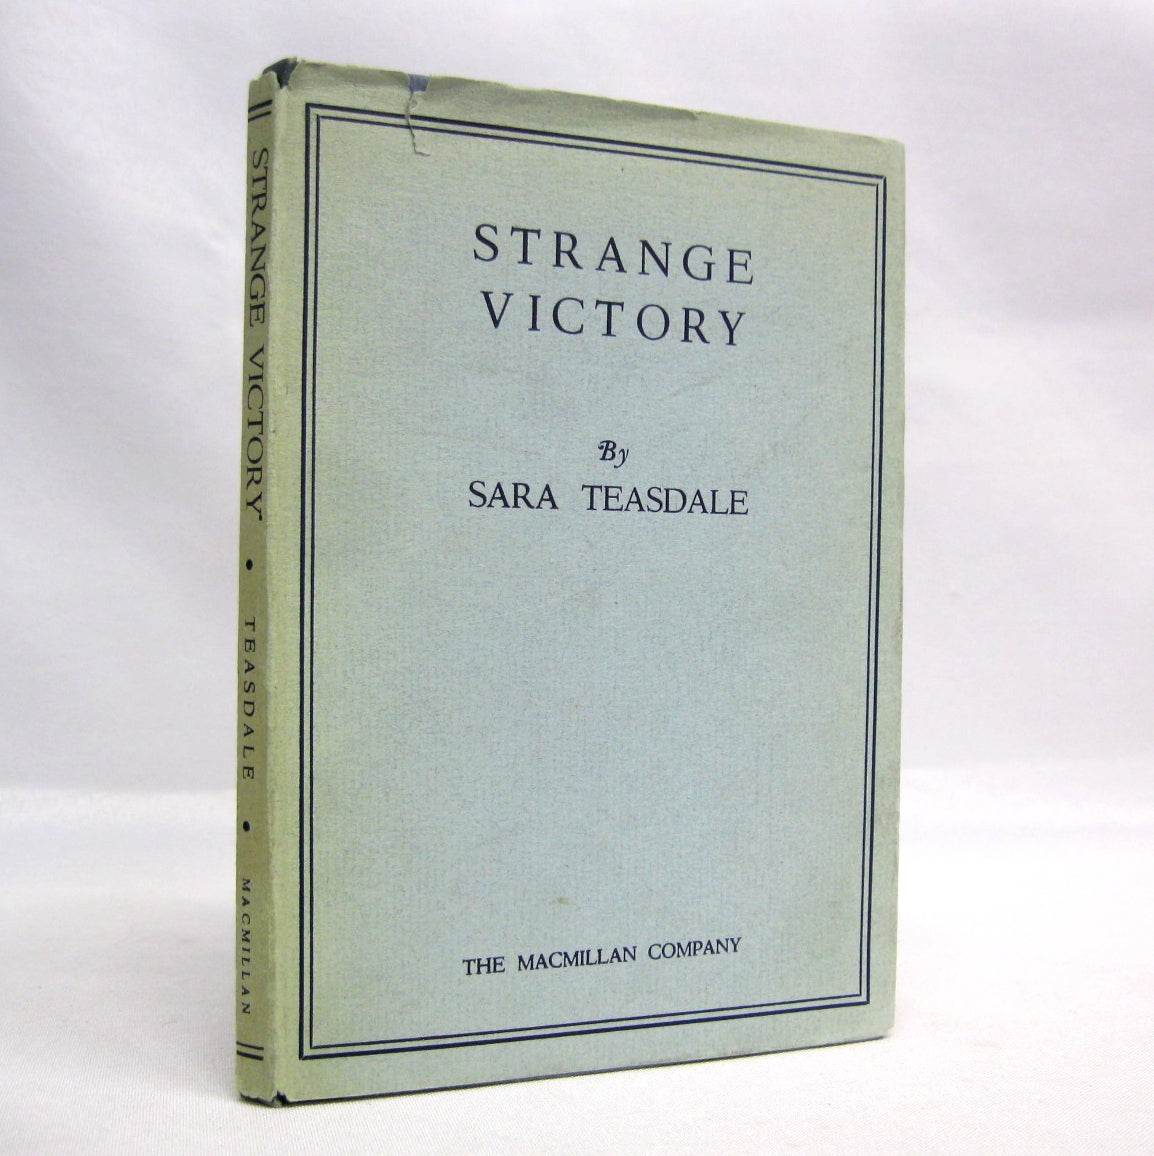 Strange Victory by Sara Teasdale